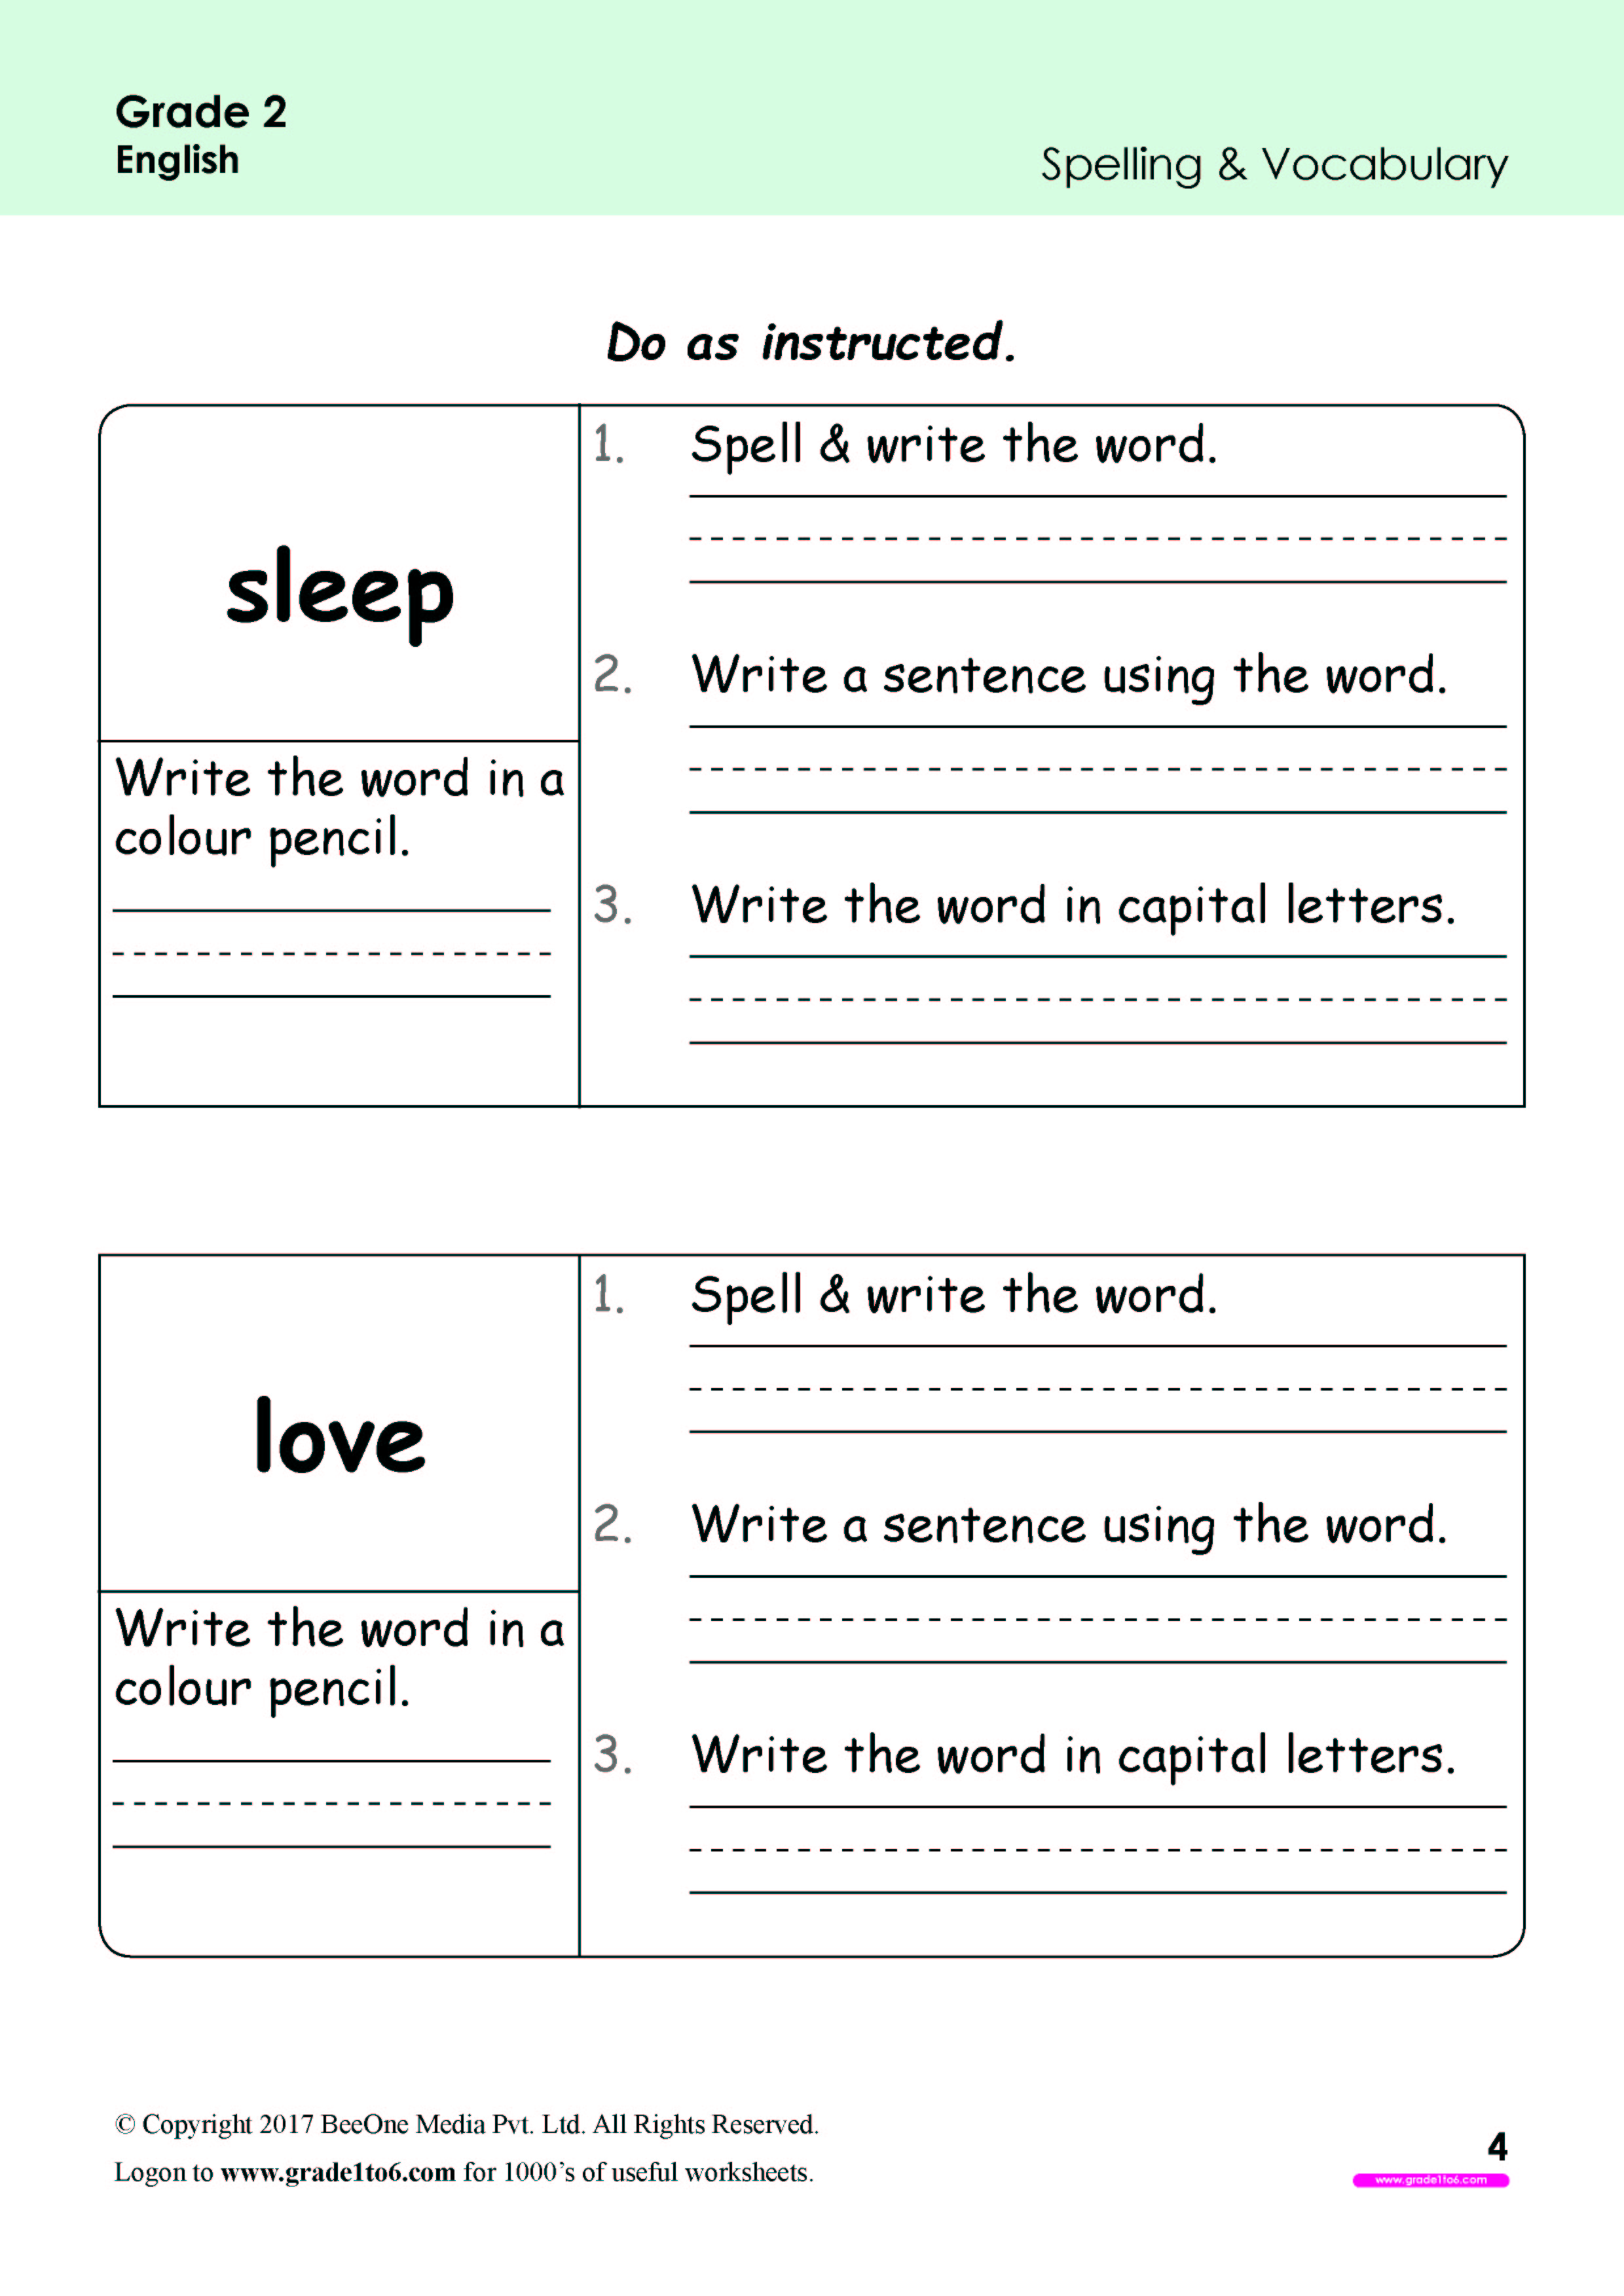 spellings worksheets free for grade 2 www grade1to6 com